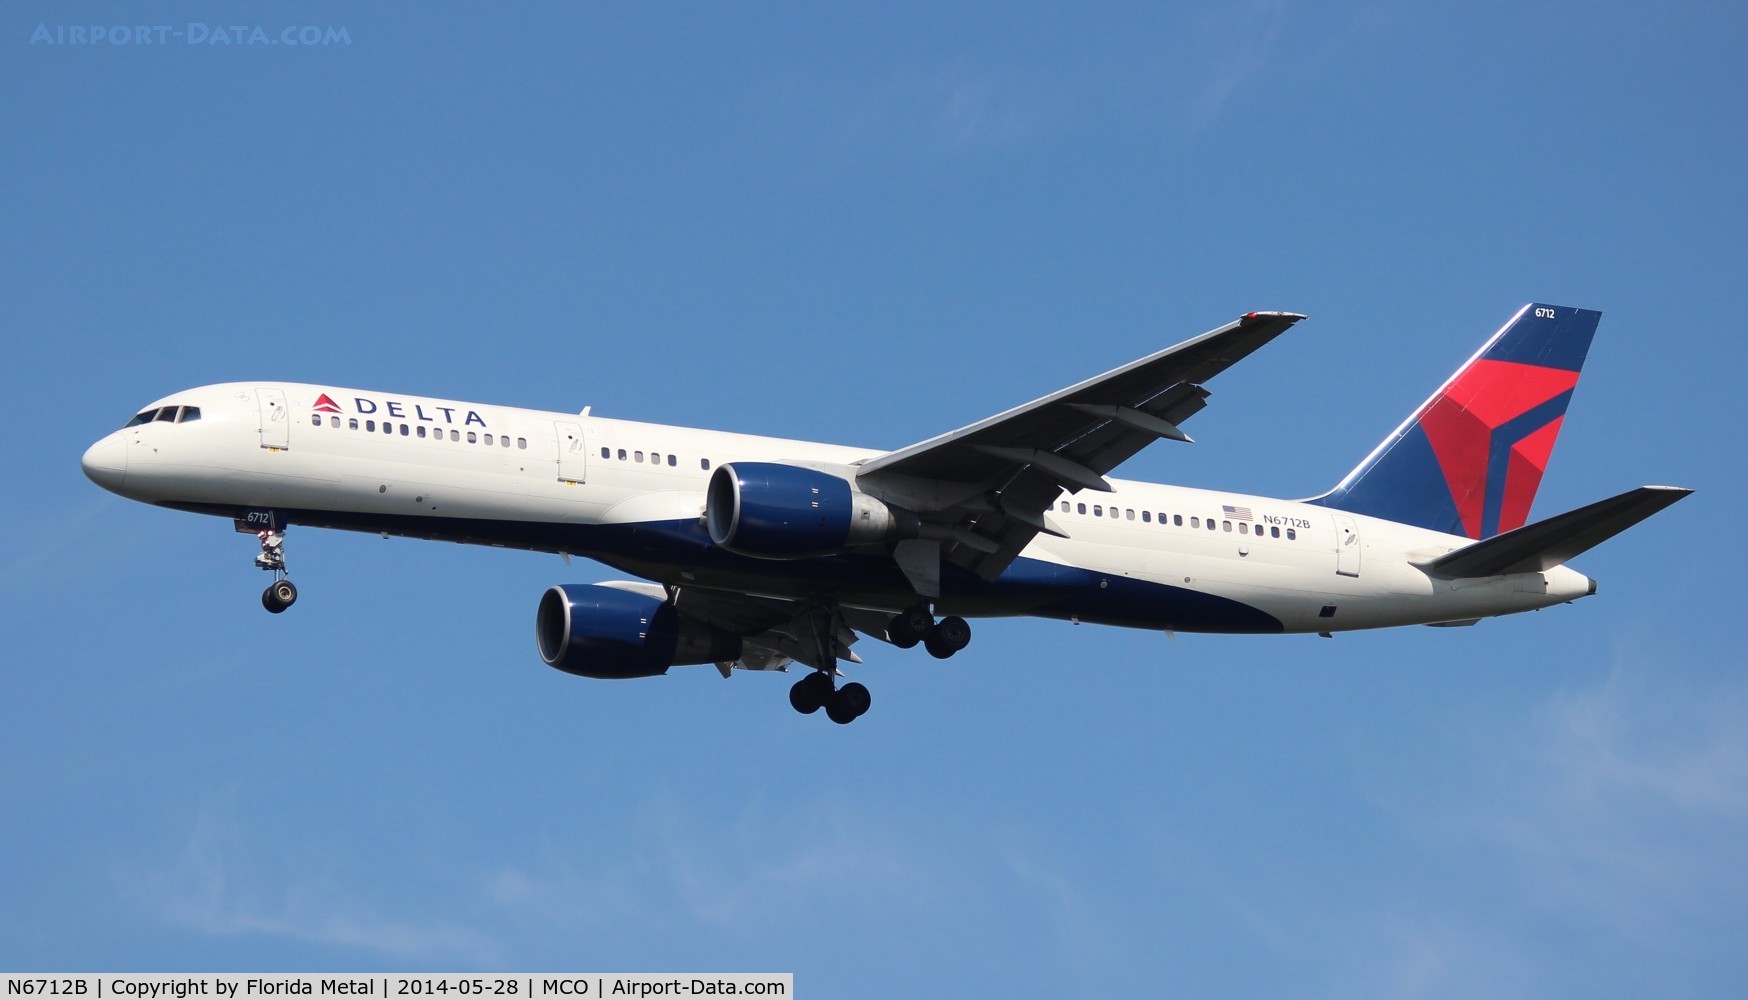 N6712B, 2000 Boeing 757-232 C/N 30484, Delta